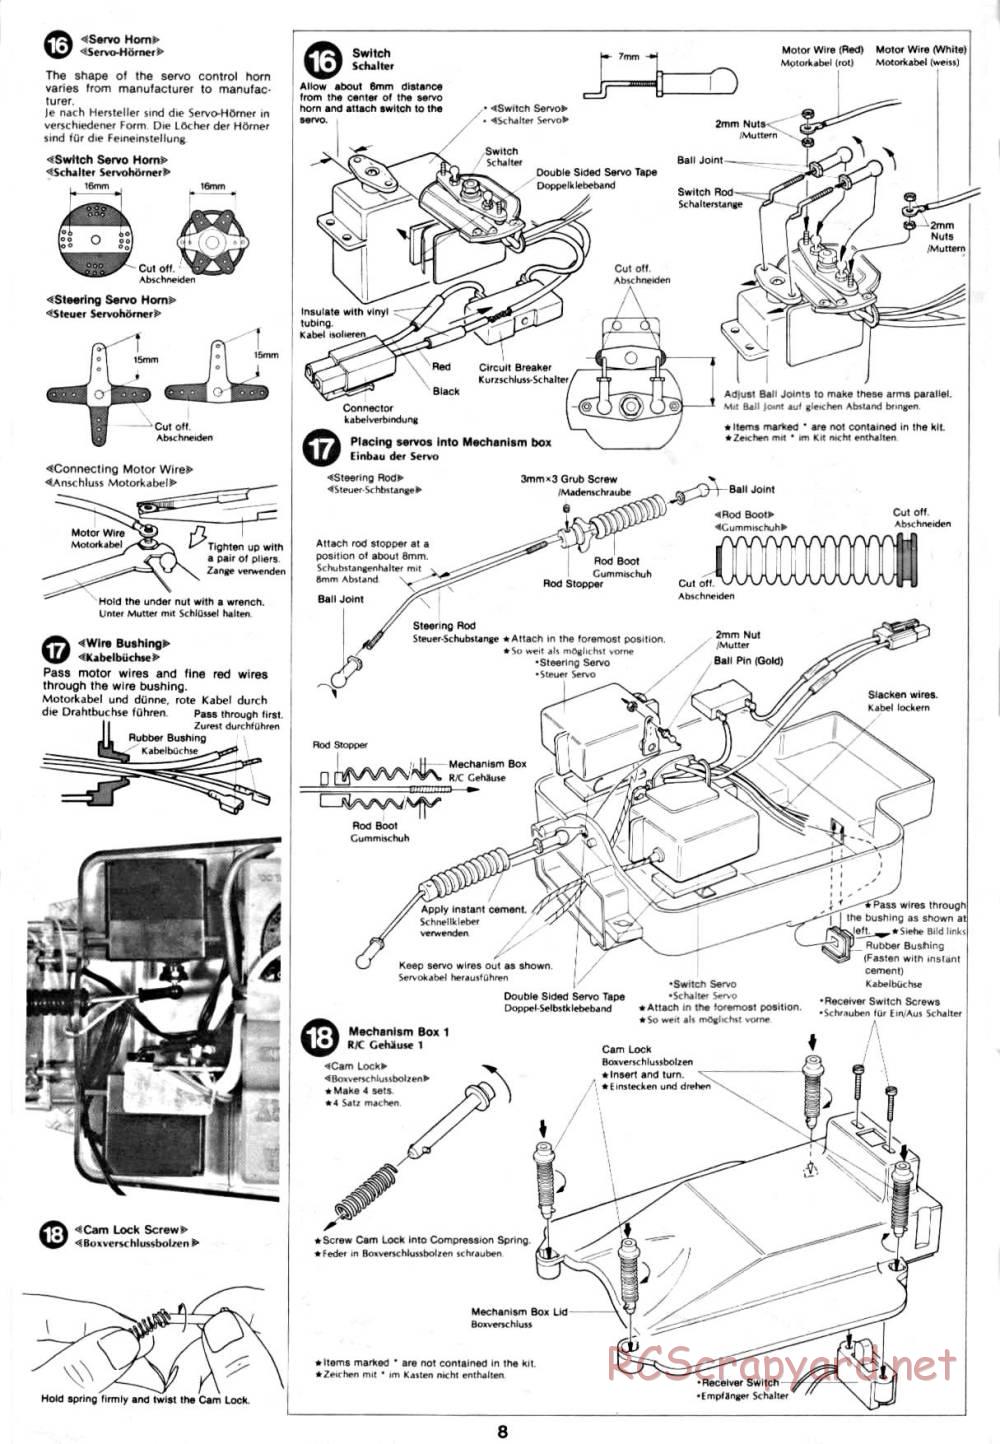 Tamiya - Ford F-150 Ranger XLT - 58027 - Manual - Page 8